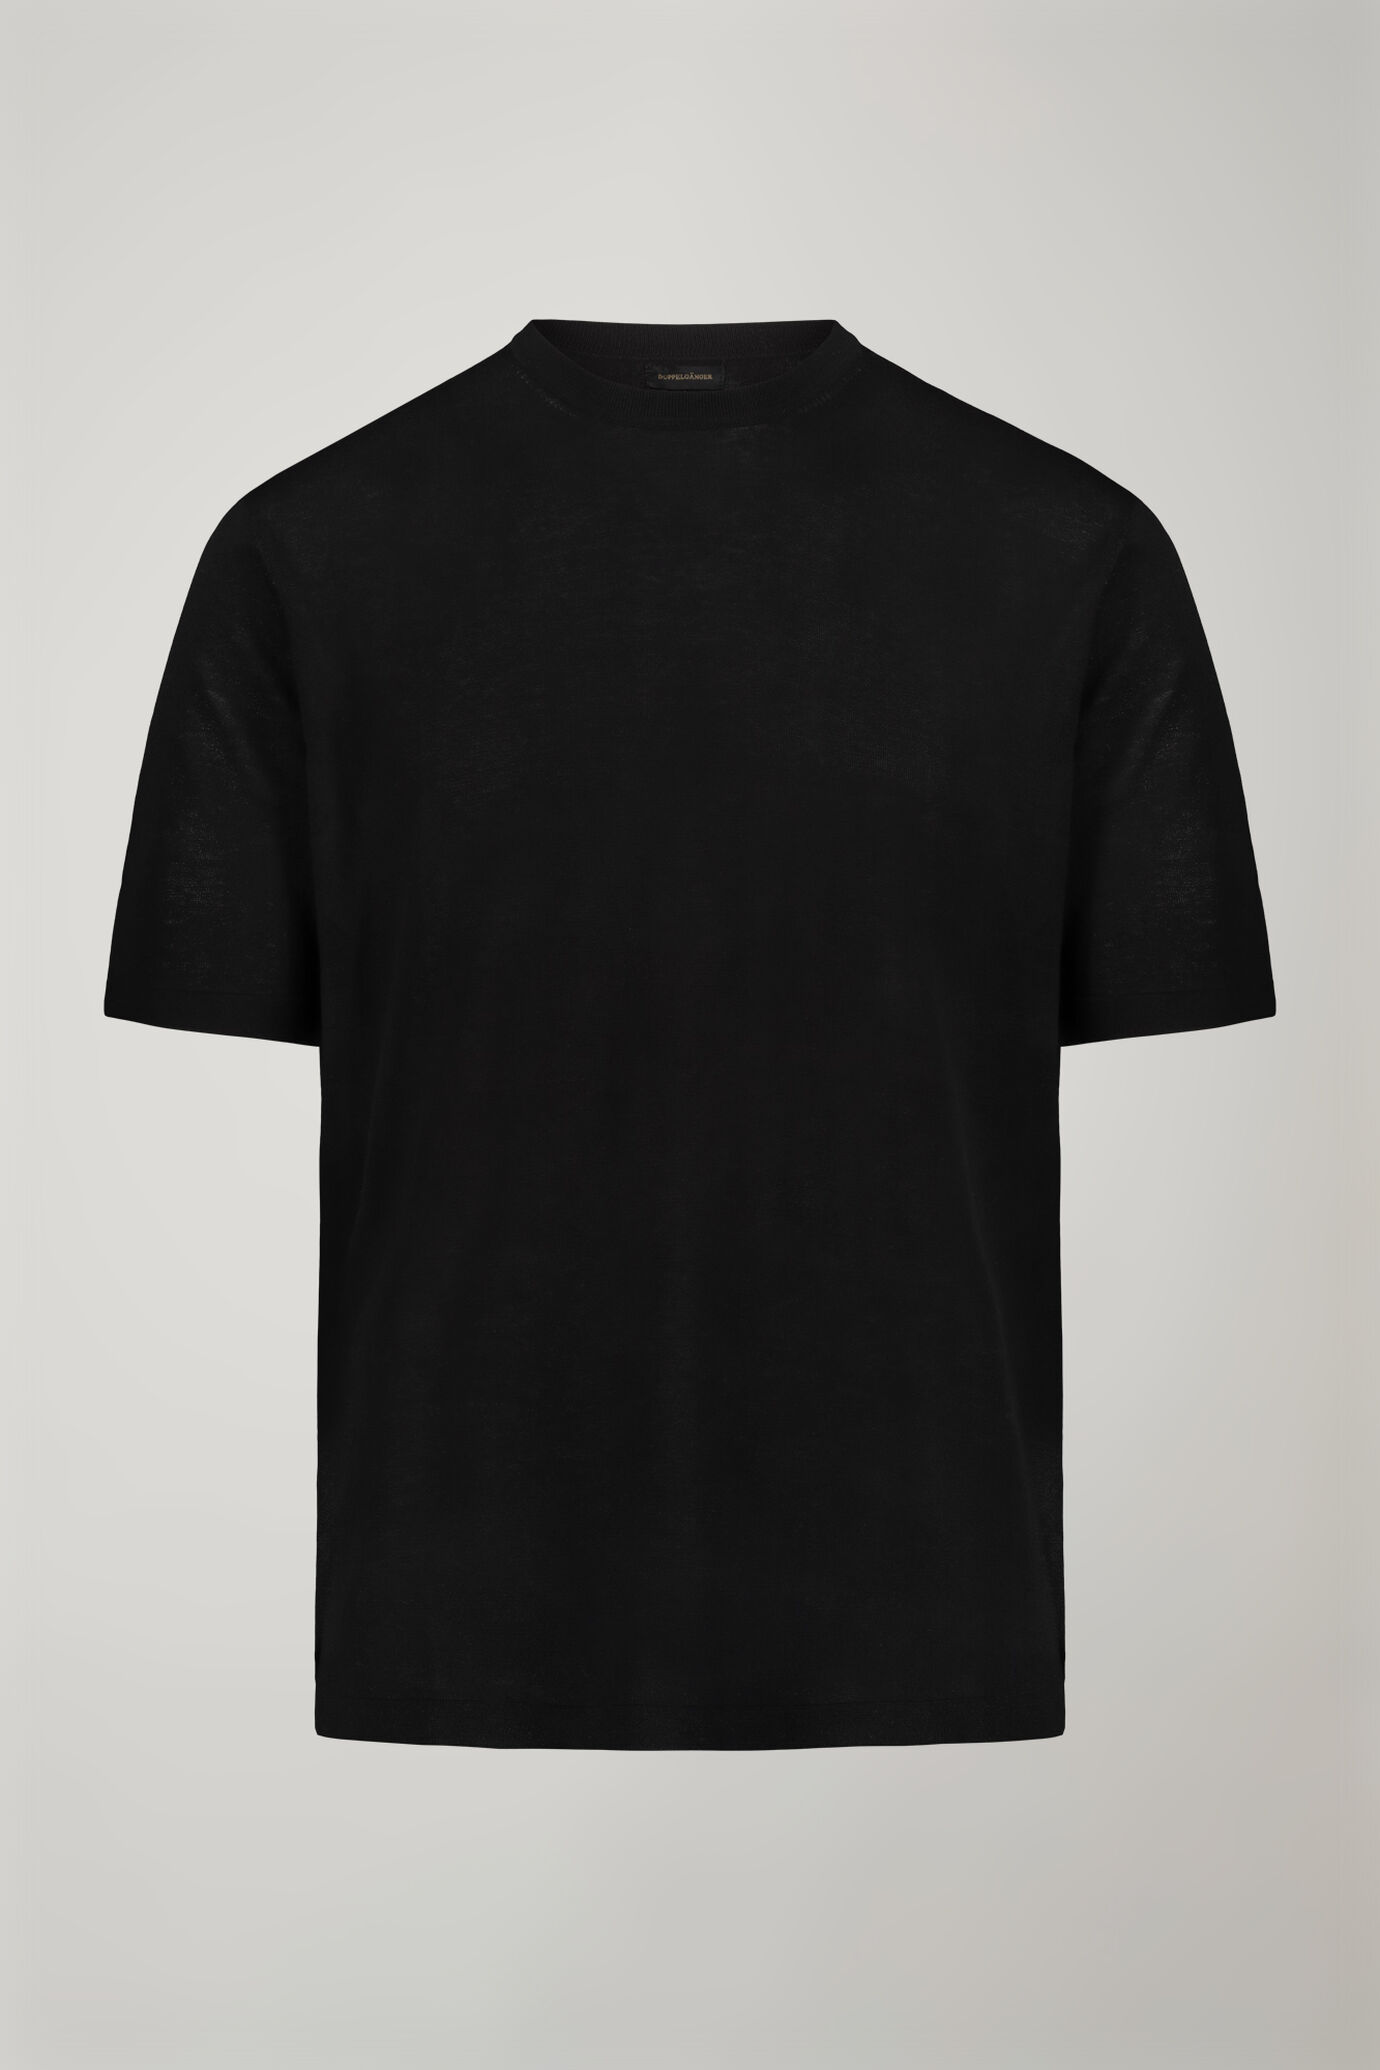 Men's knitted t-shirt 100% cotton short-sleeved regular fit image number 4